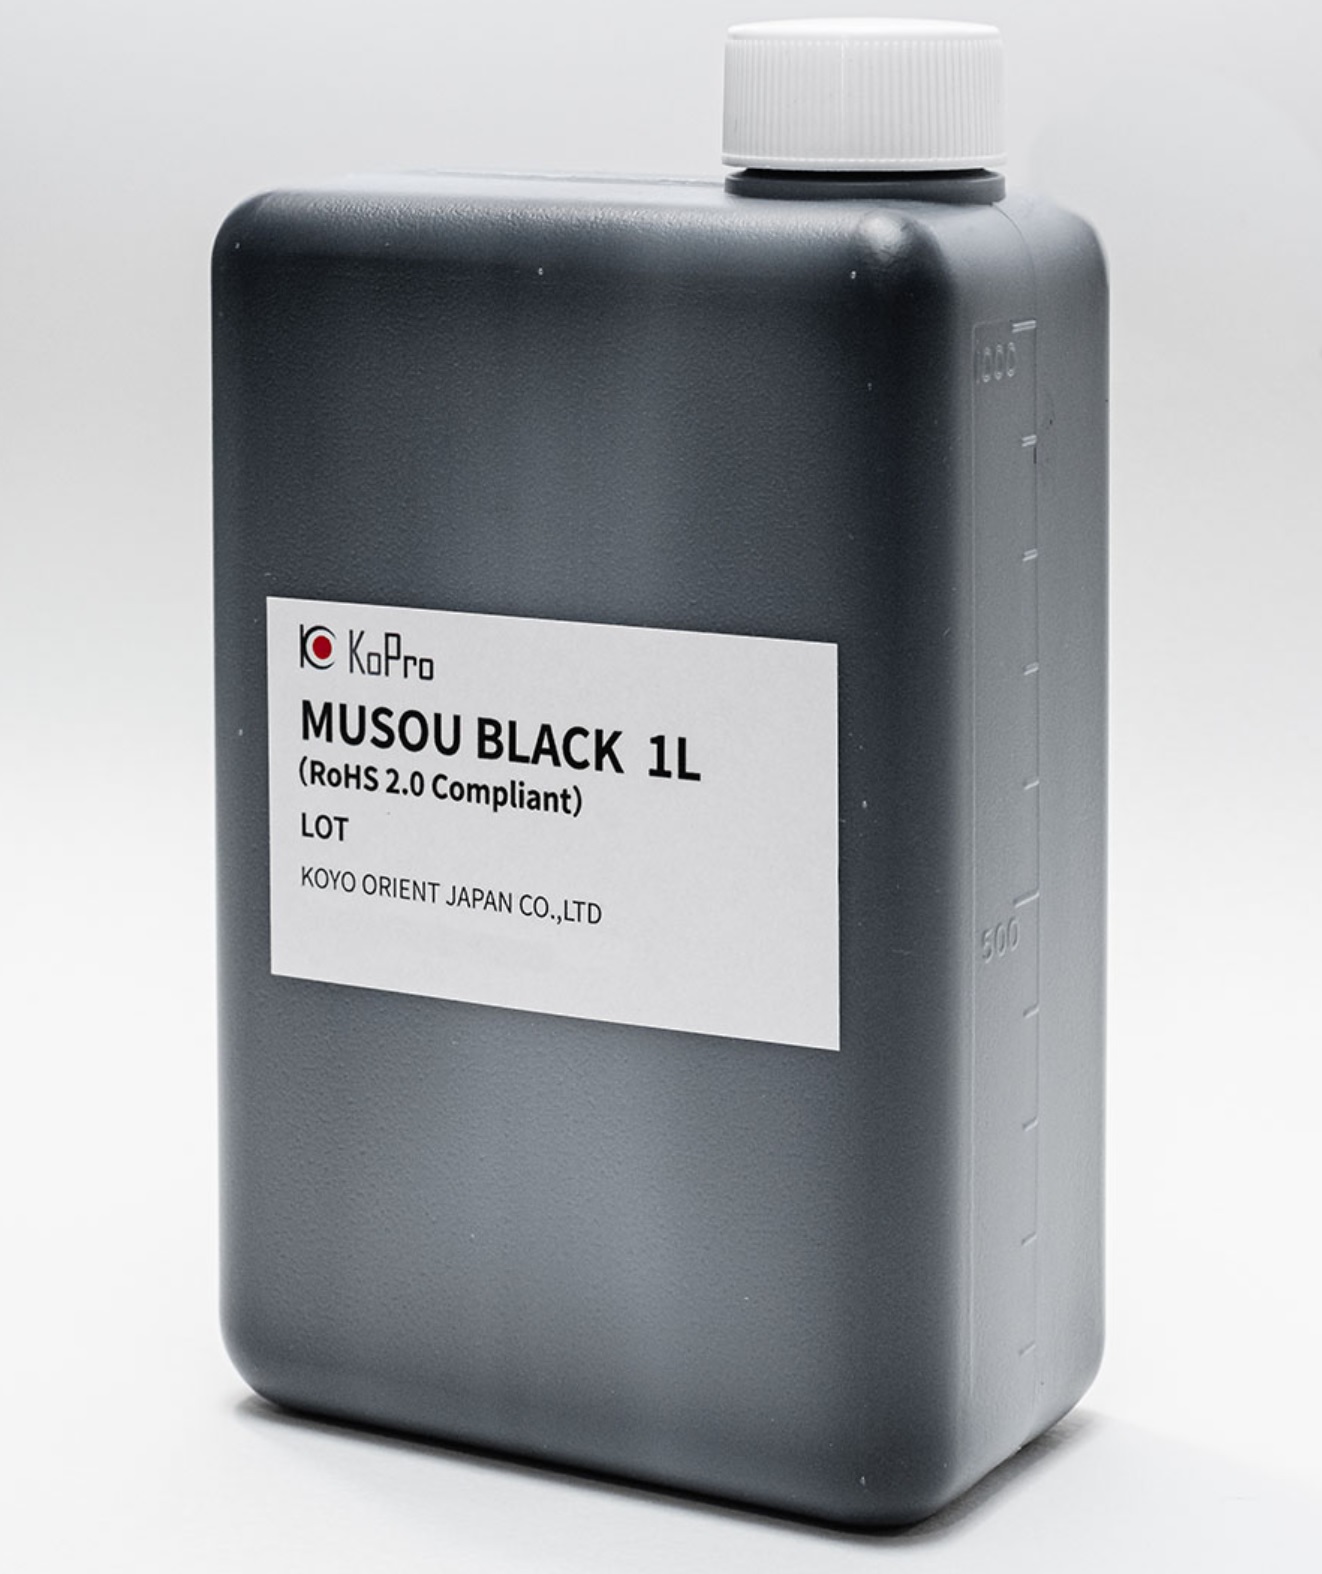 Koyo Orient Japan Shin Black Musou 100ml Japanese Black Acrylic Paint Products